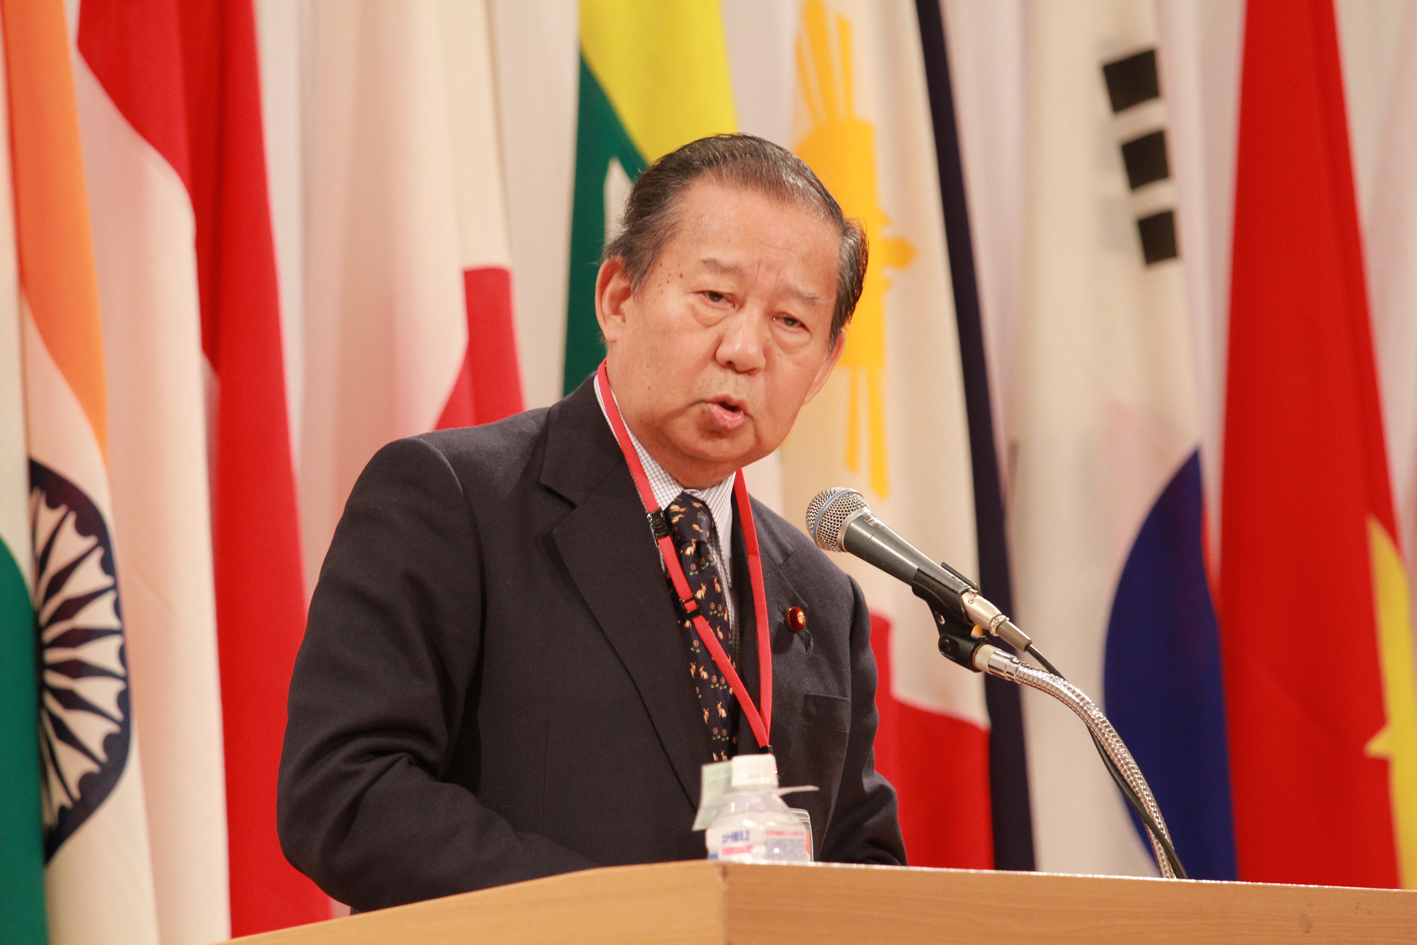 Toshihiro Nikai (Member of the House of Representatives)